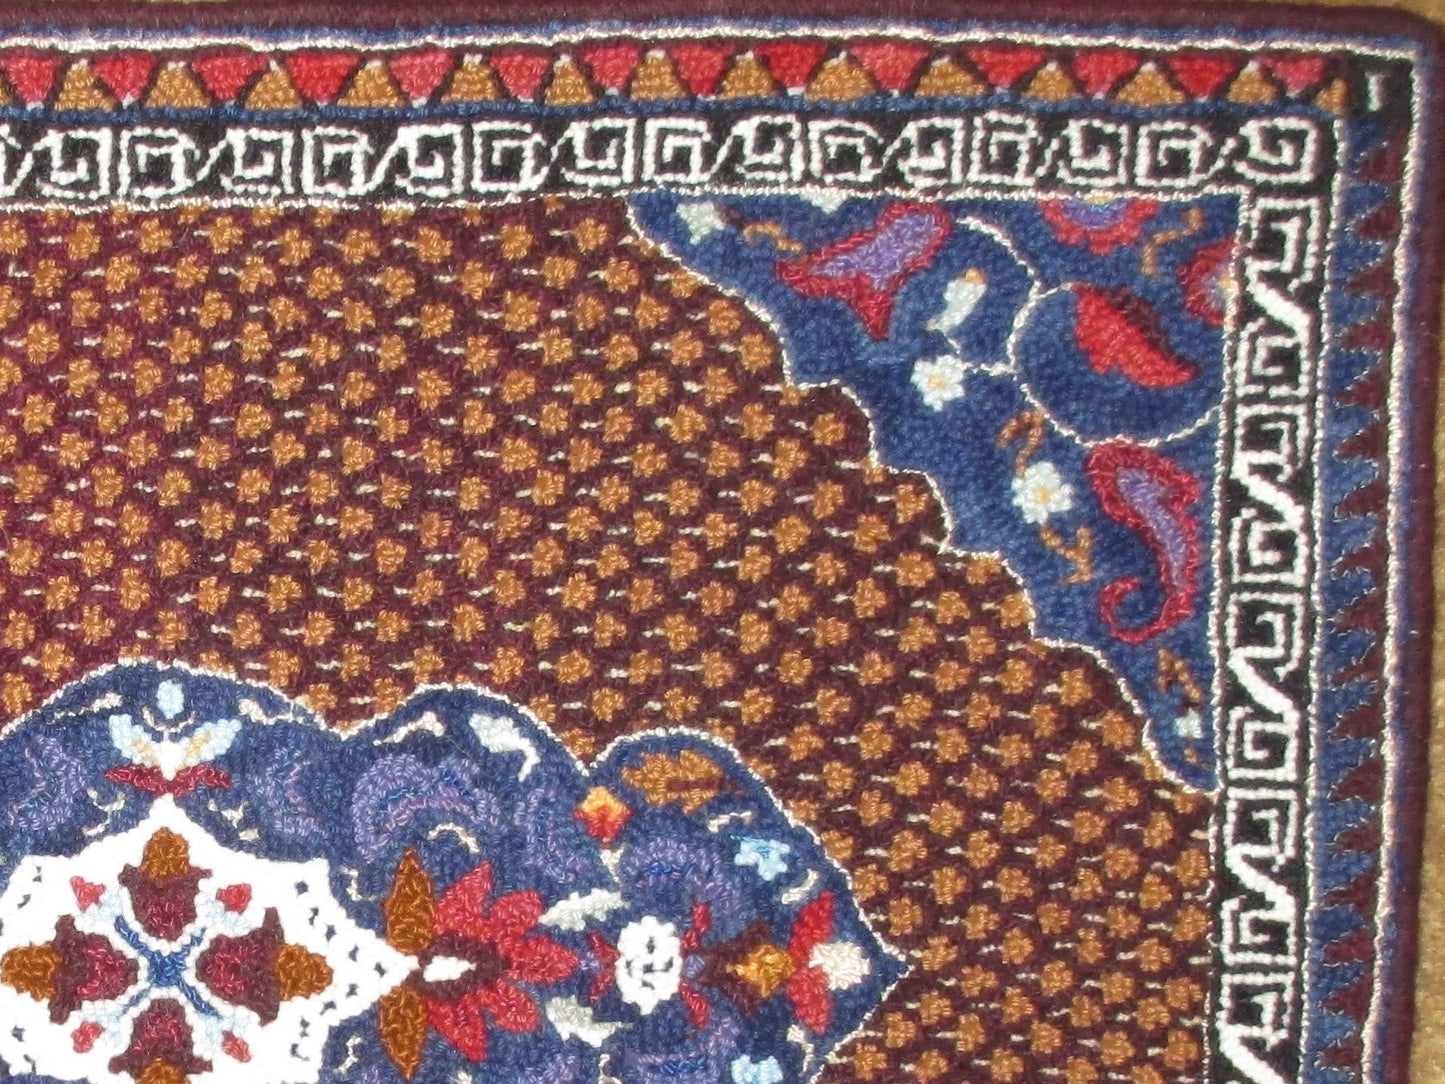 Magic Carpet Pattern on linen, 35"x26"